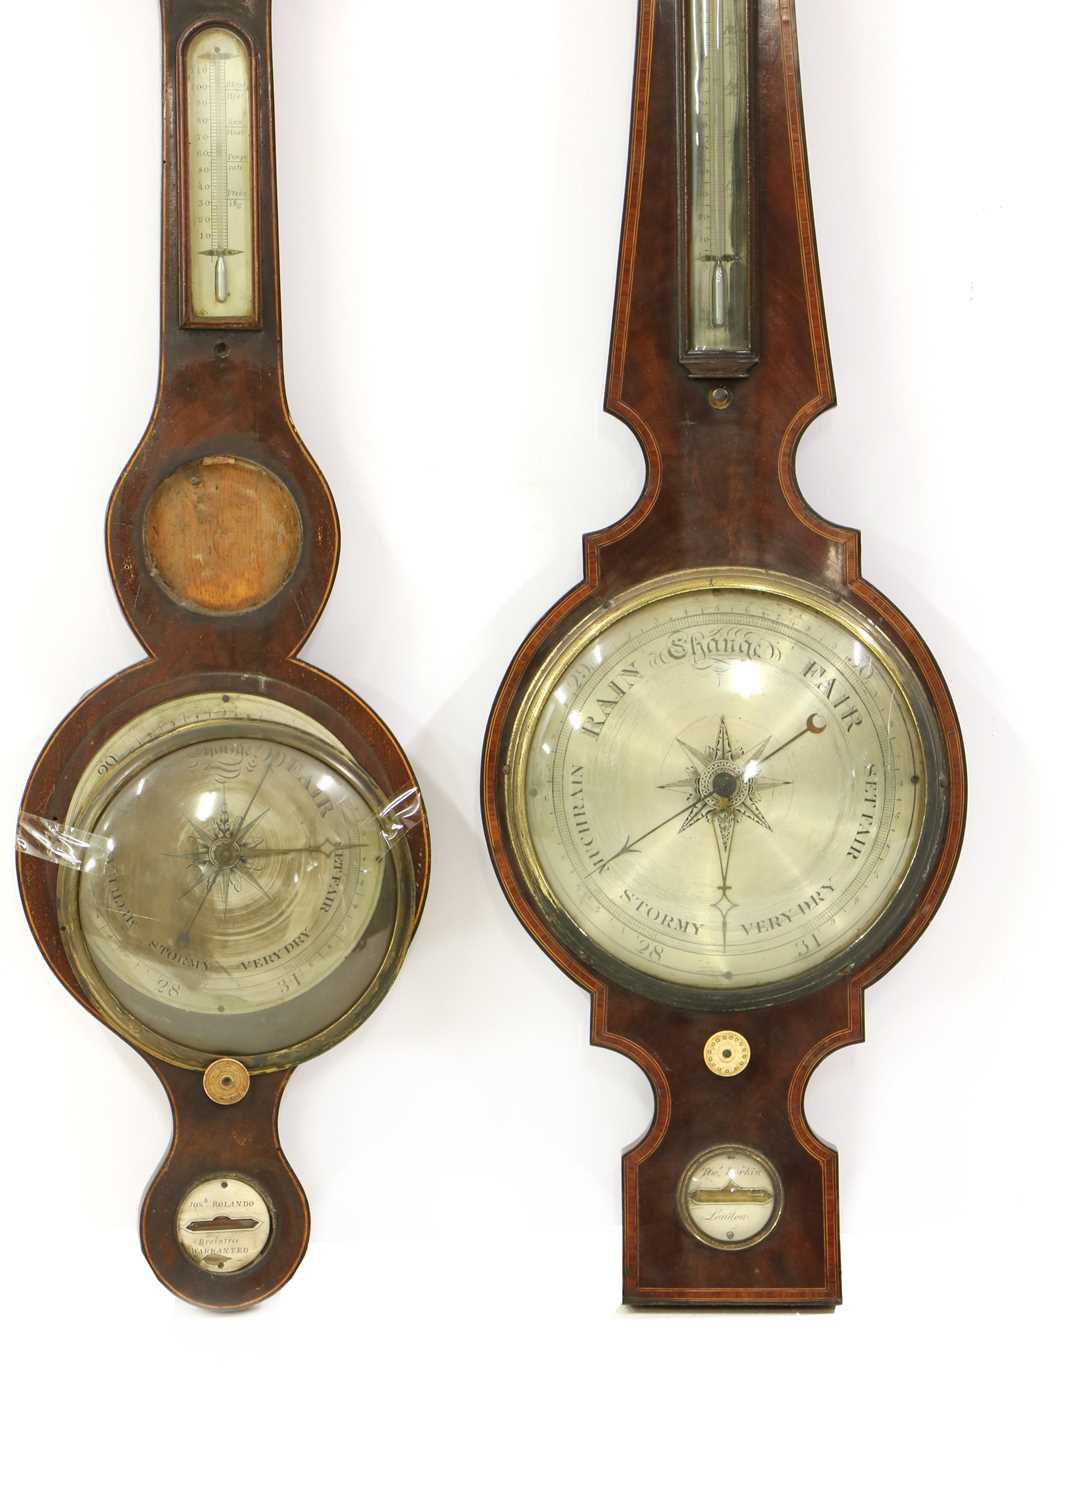 Two 19th century mahogany wheel barometers - Image 2 of 3